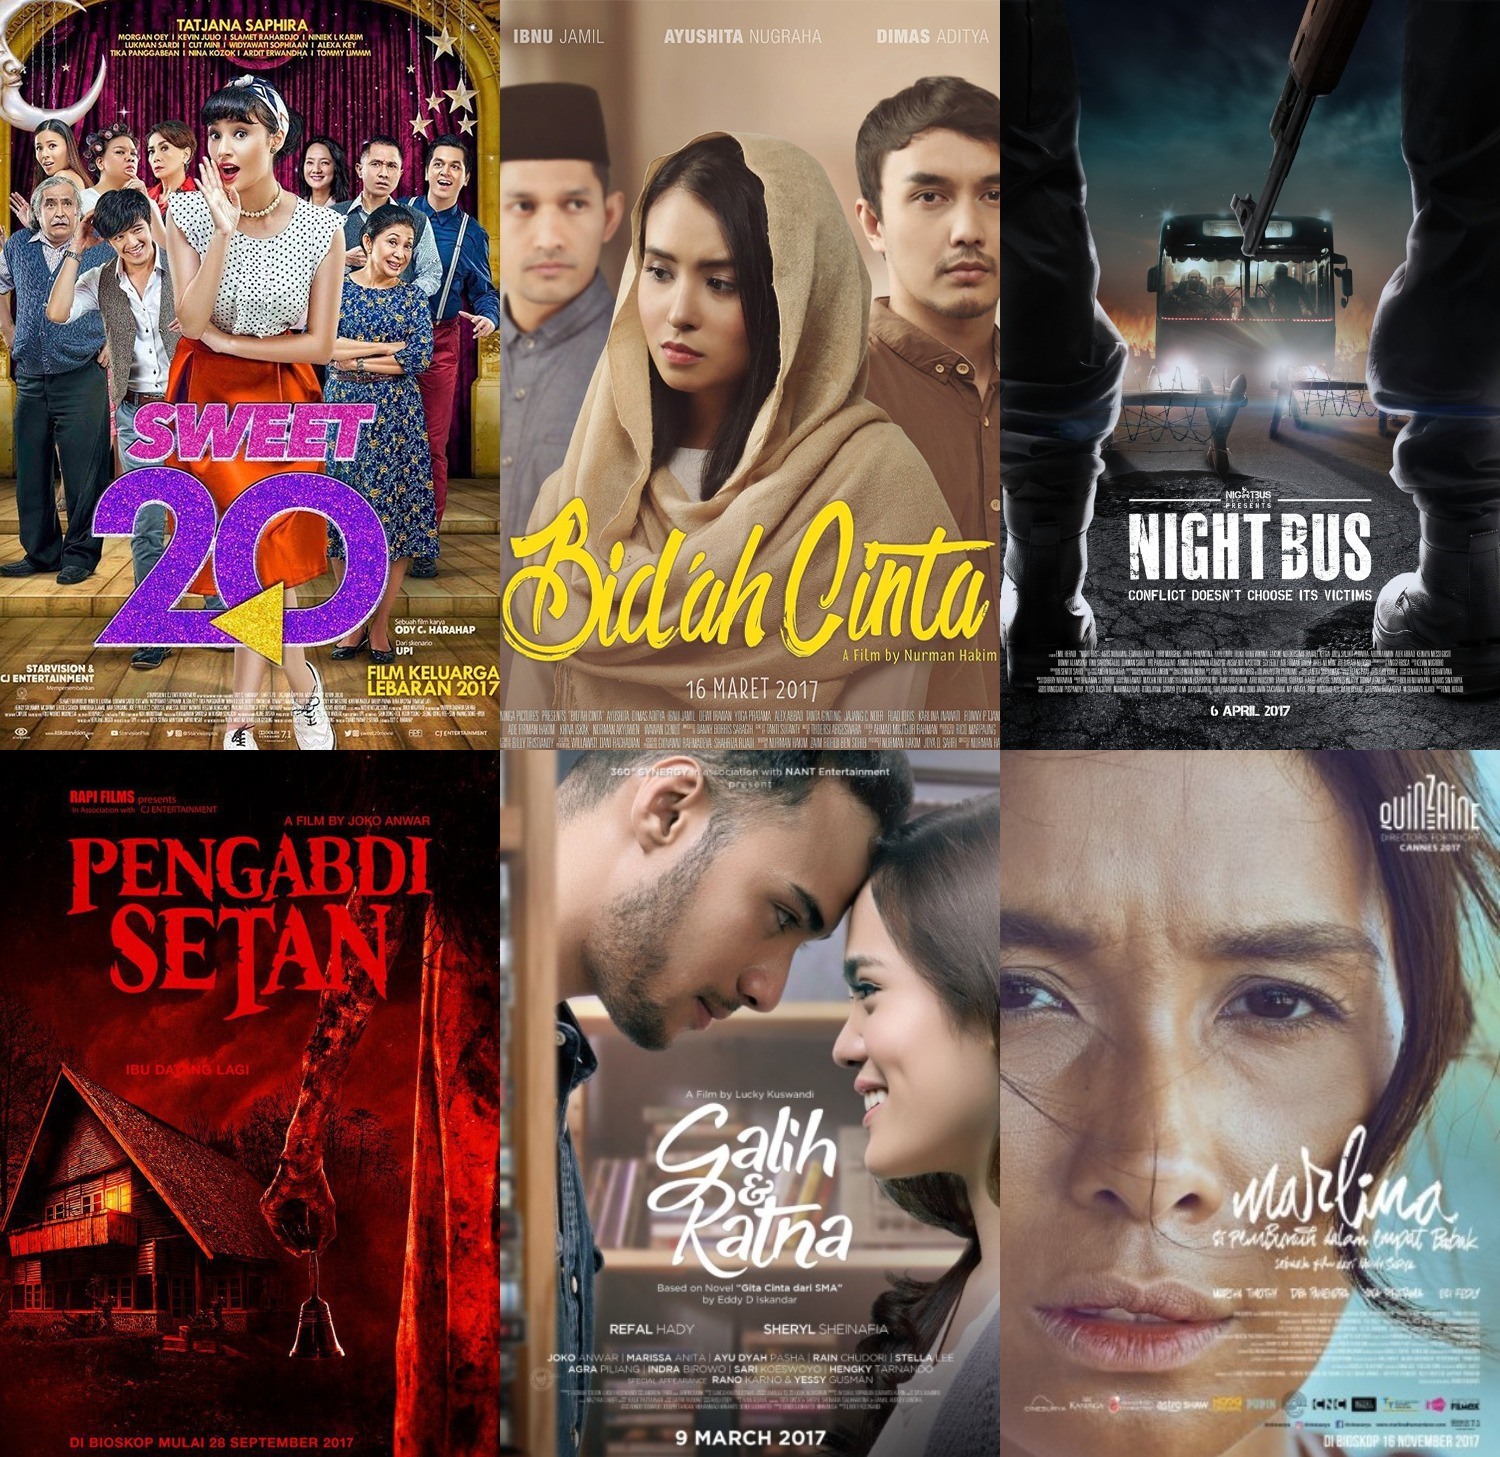 Download Film Indonesia Terbaru 2018 Miblogs Download Anything